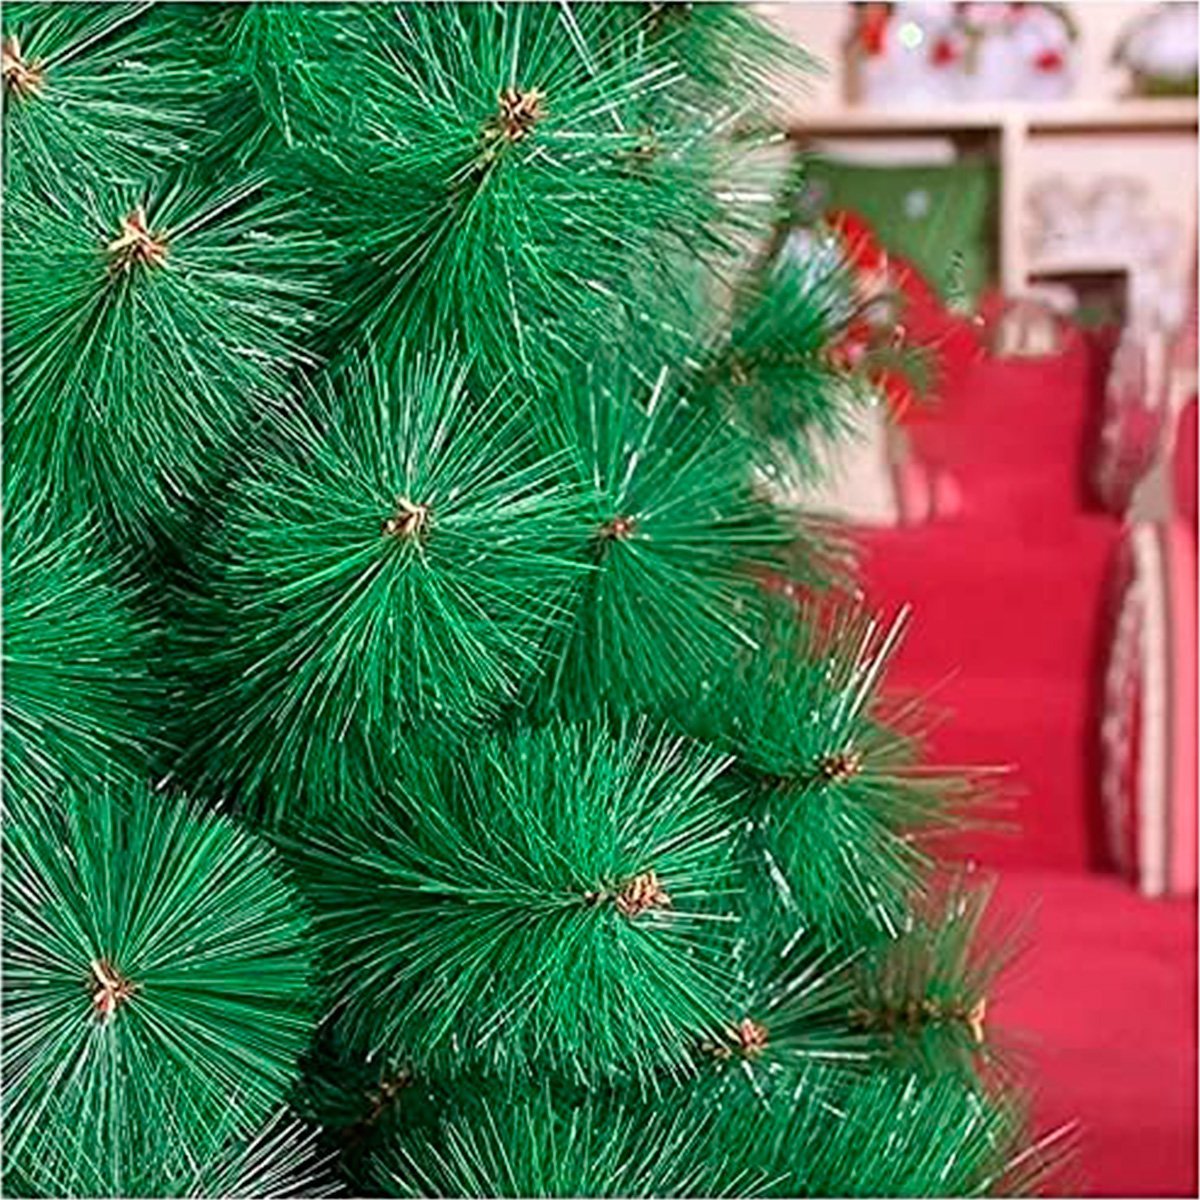 Arvore de natal 1,80 M 750 Galhos Árvore de Natal completa PVC Verde